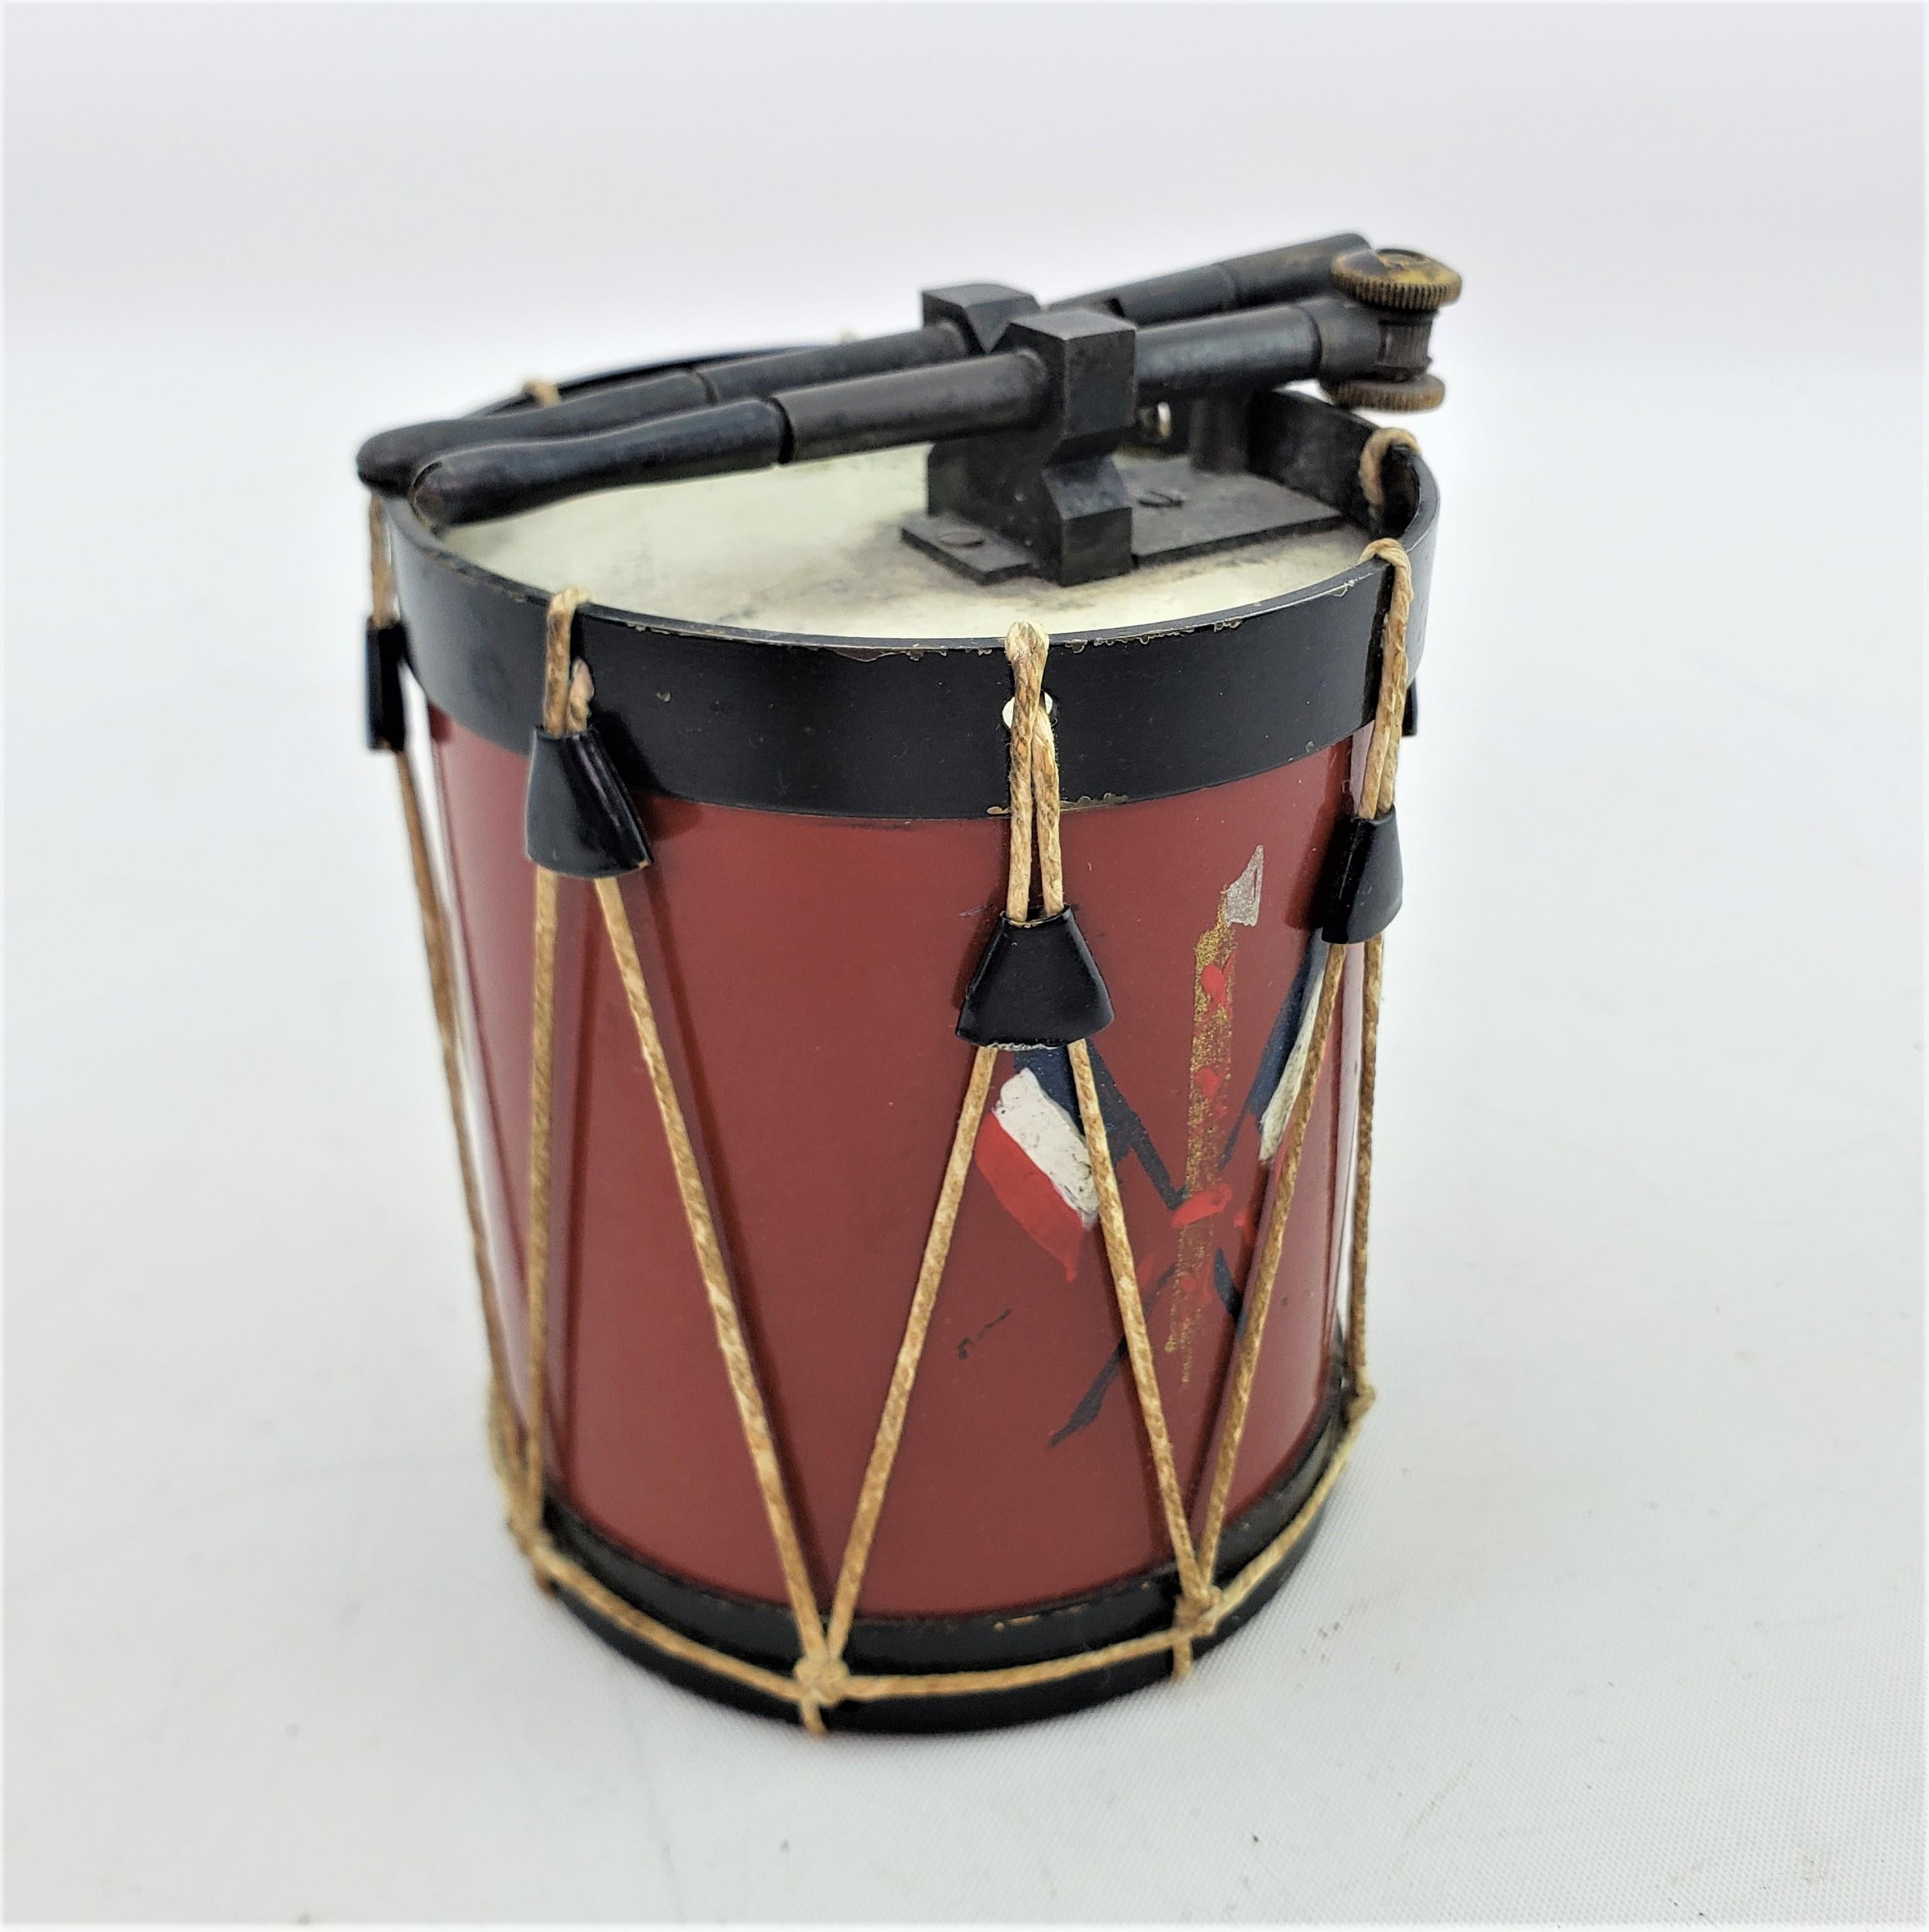 drum magazine lighter holder